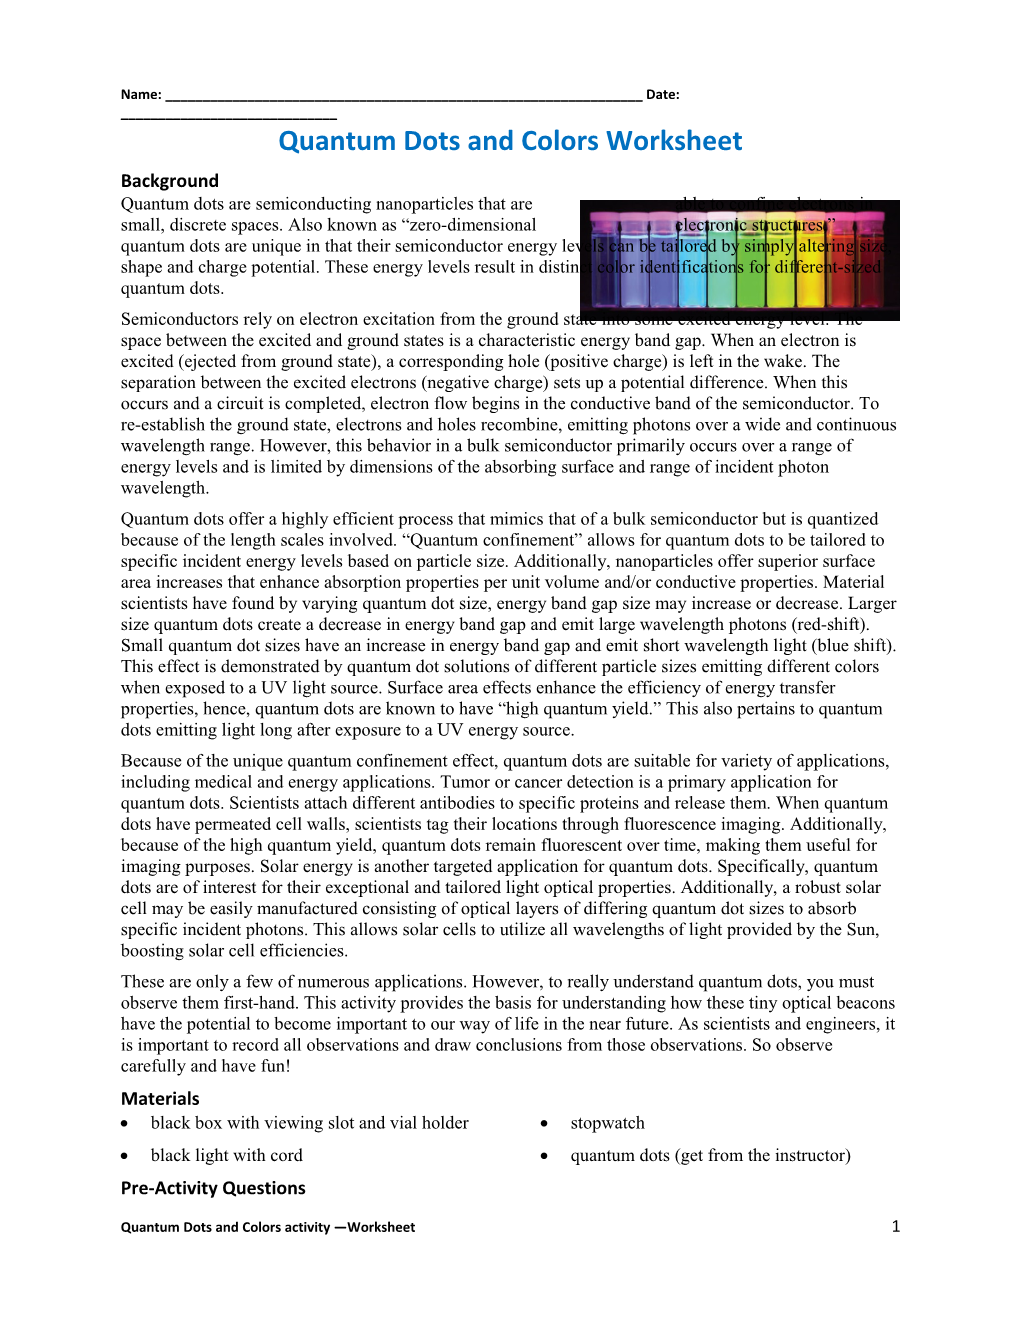 Quantum Dots and Colors Worksheet